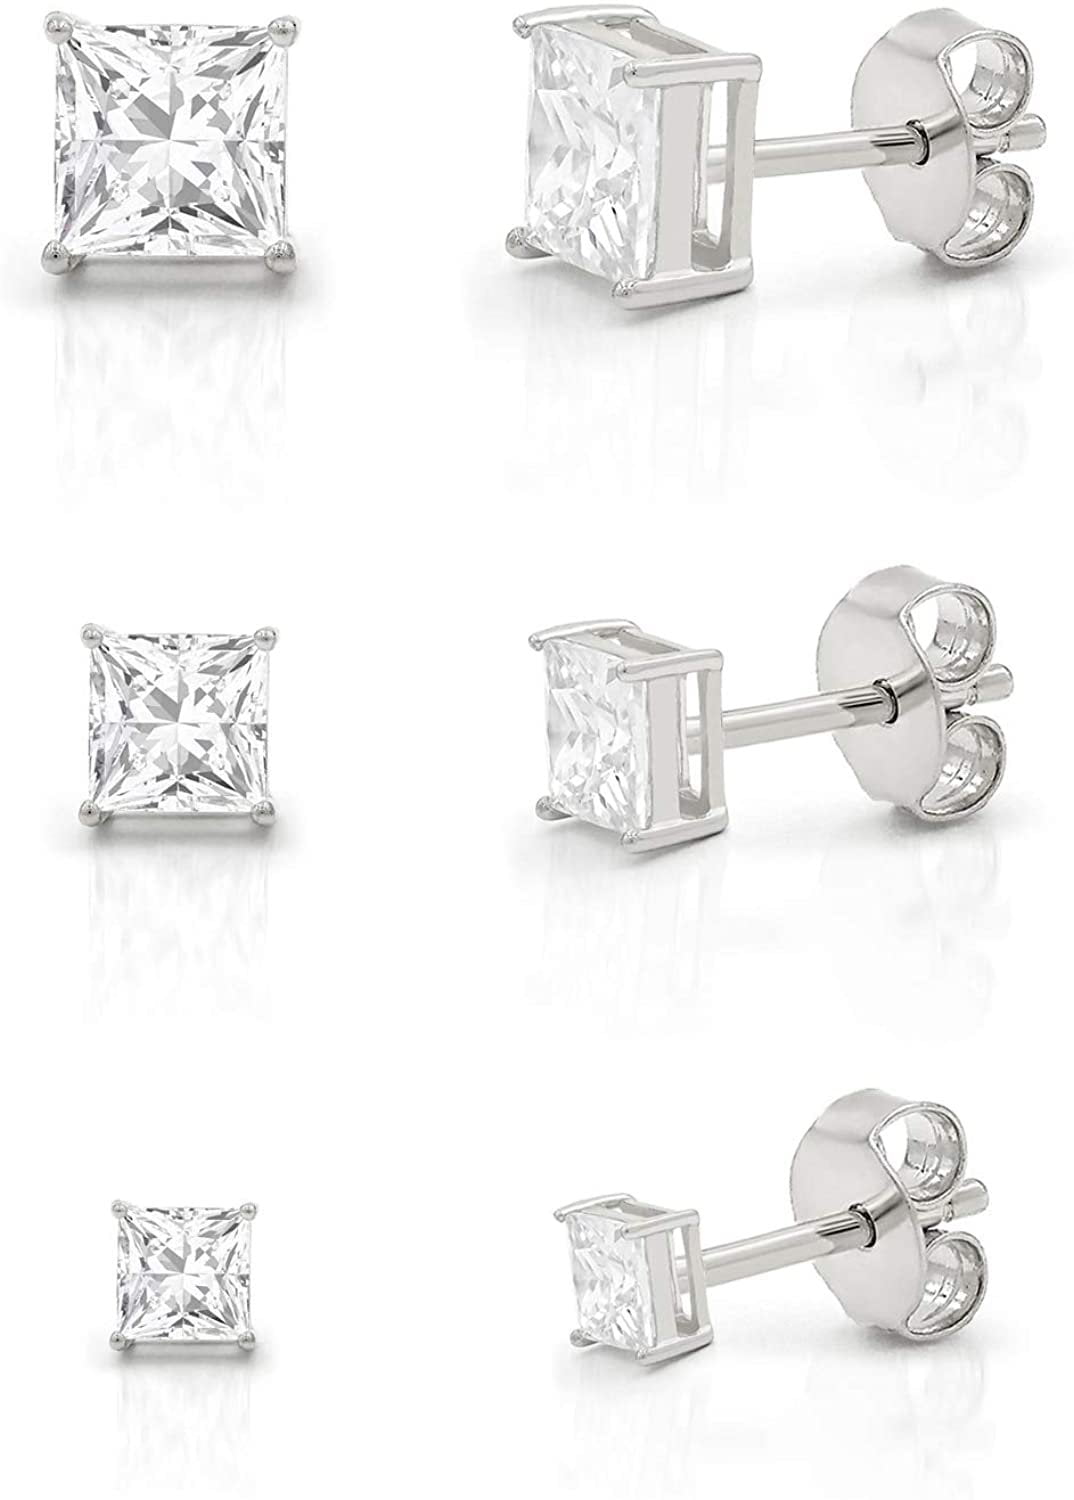 10 Pair Set Sterling Silver Cubic Zirconia Square Black Earrings Studs 7 mm Princess cut 4 carat/pair